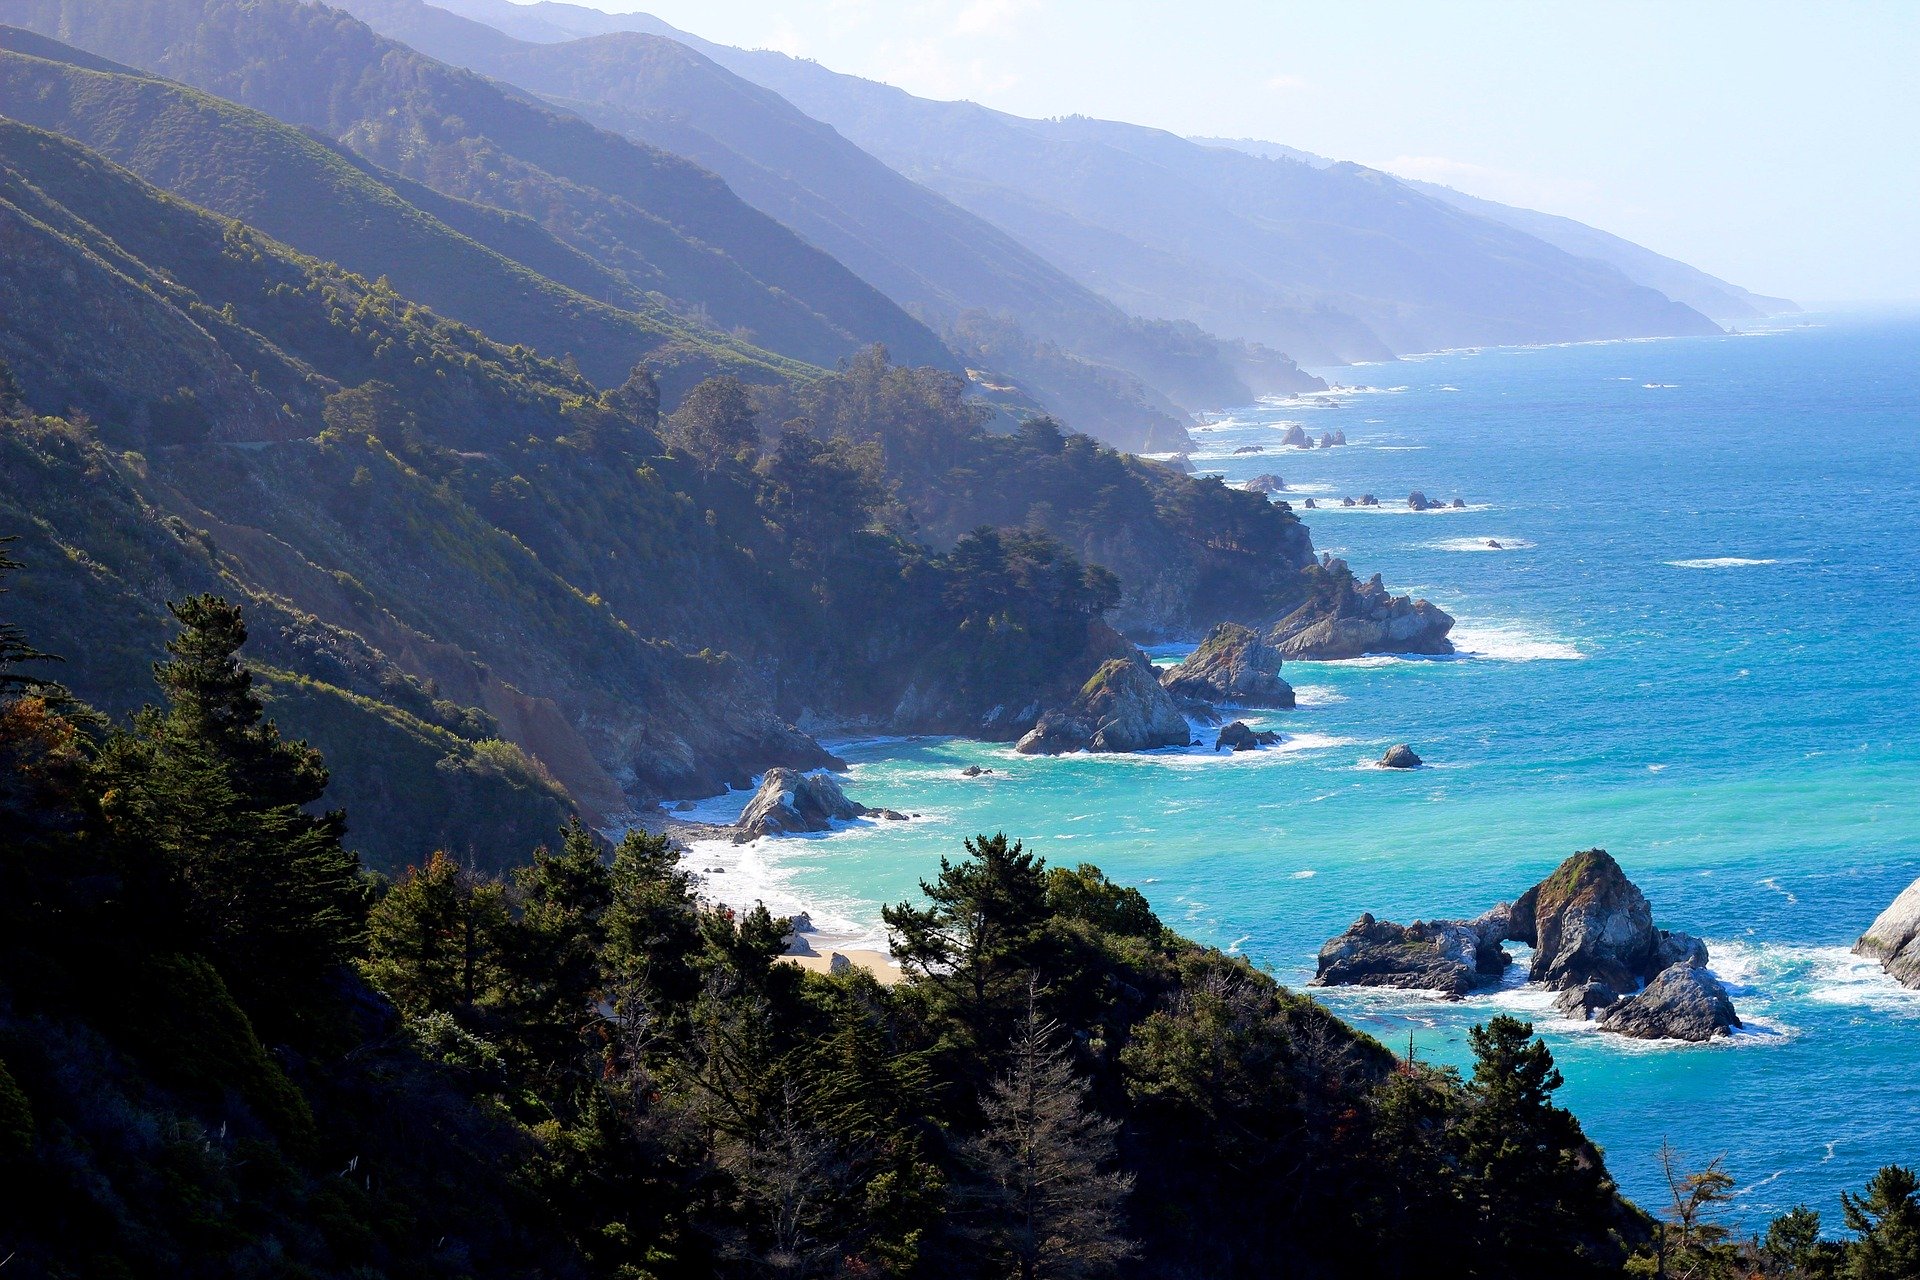 dramatic coastline of Big Sur, California.  Coastal mountains meeting turquoise blue ocean.